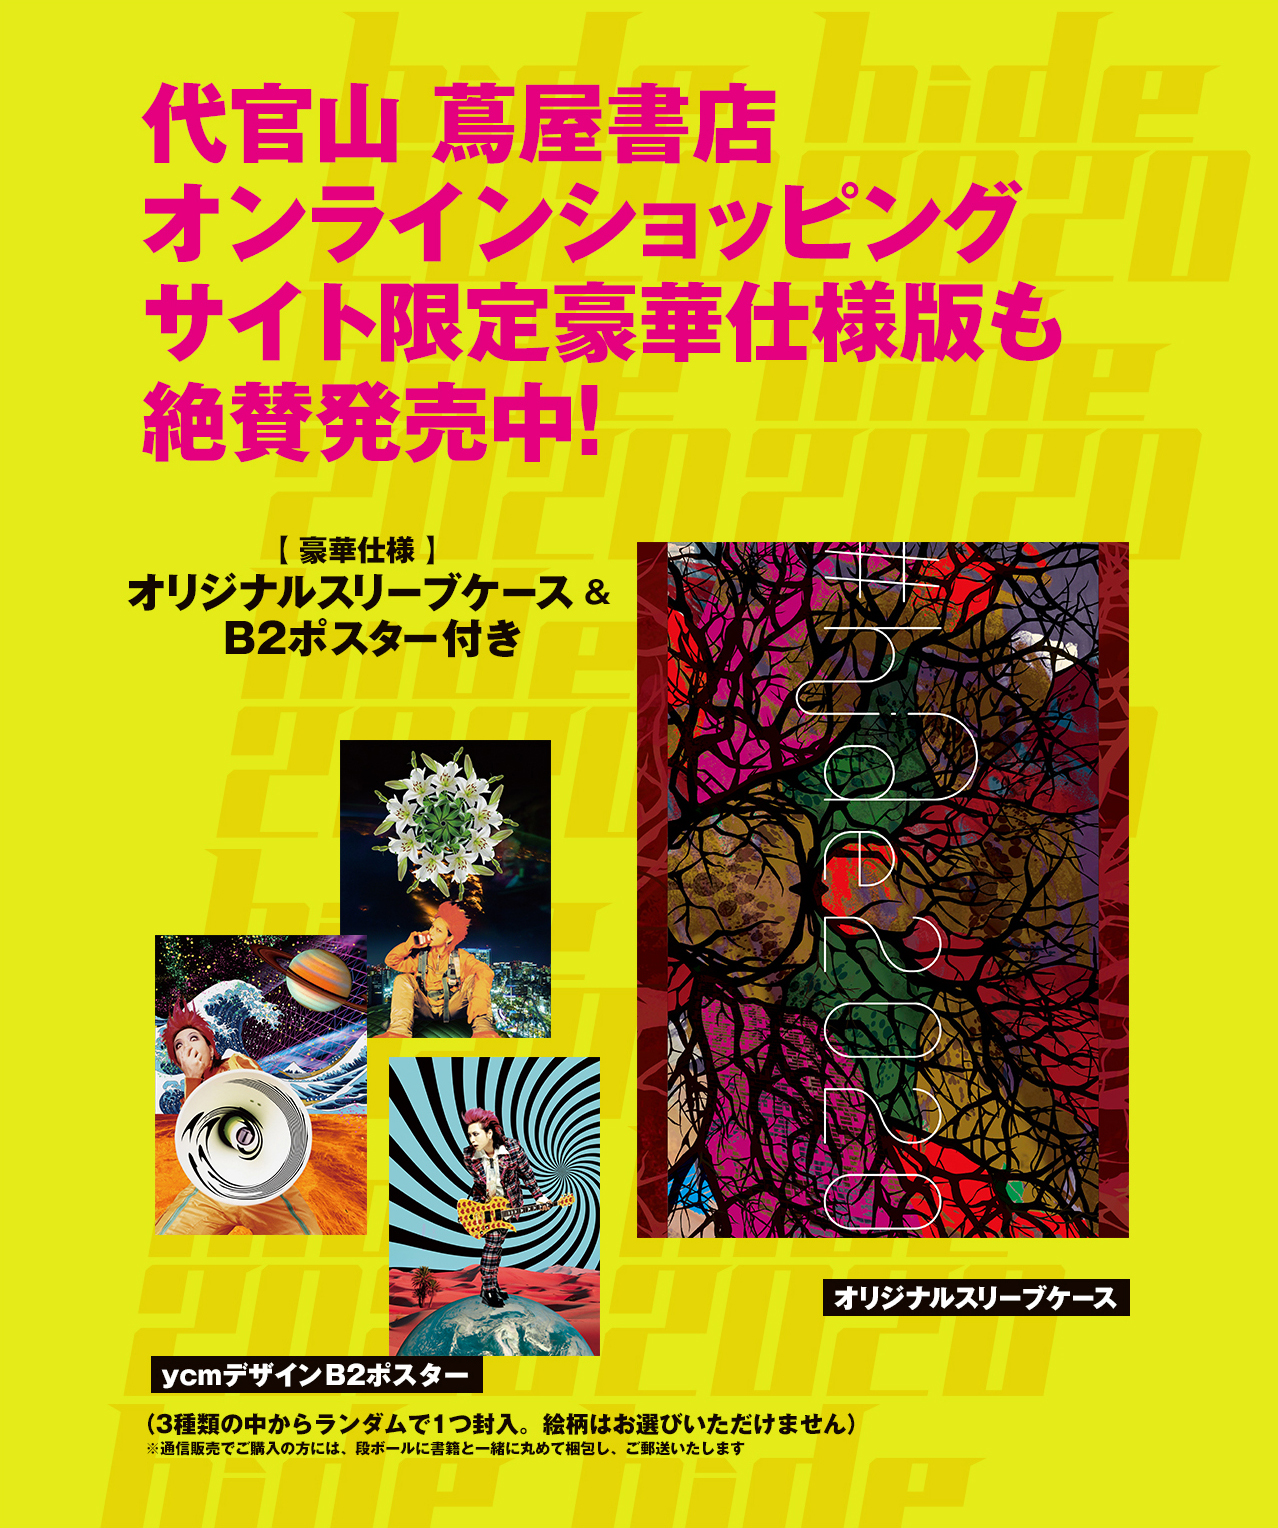 hide2020 Visual art Exhibition | TRANSWORLD JAPAN